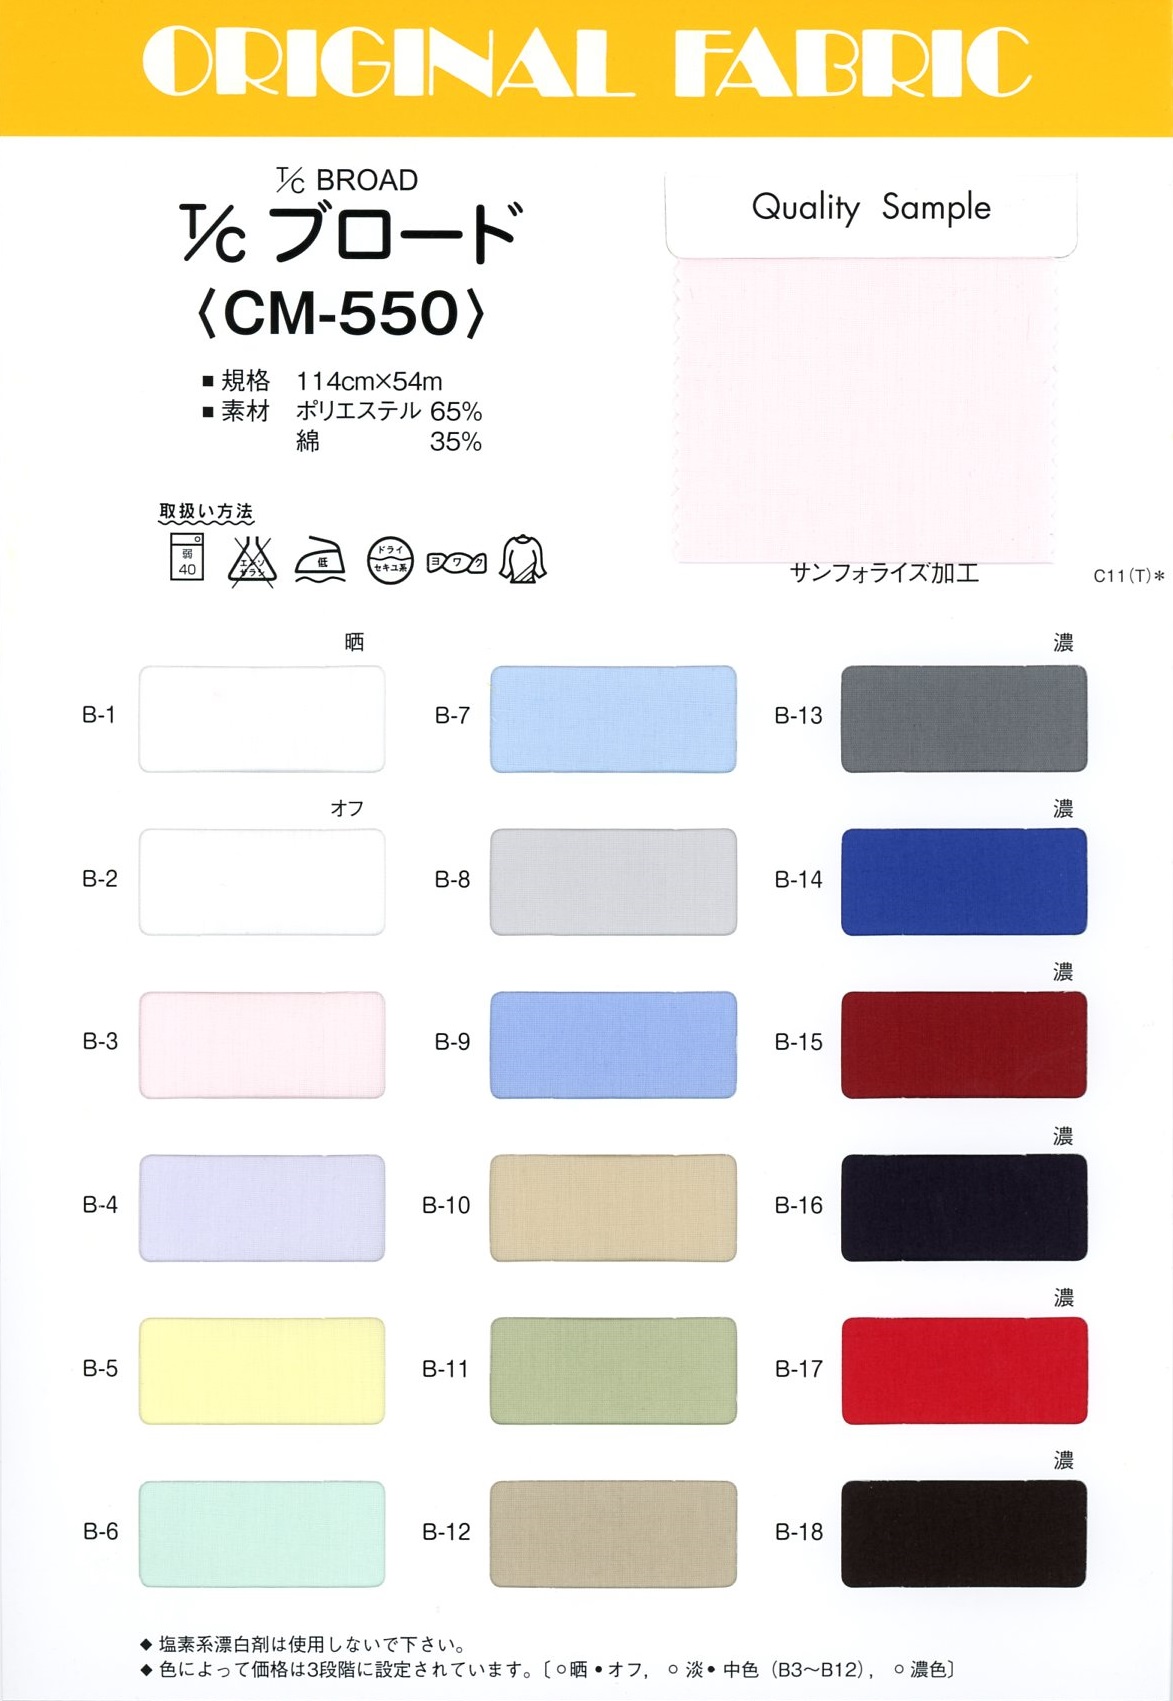 CM-550 T / C Vải Broadcloth Masuda (Masuda)